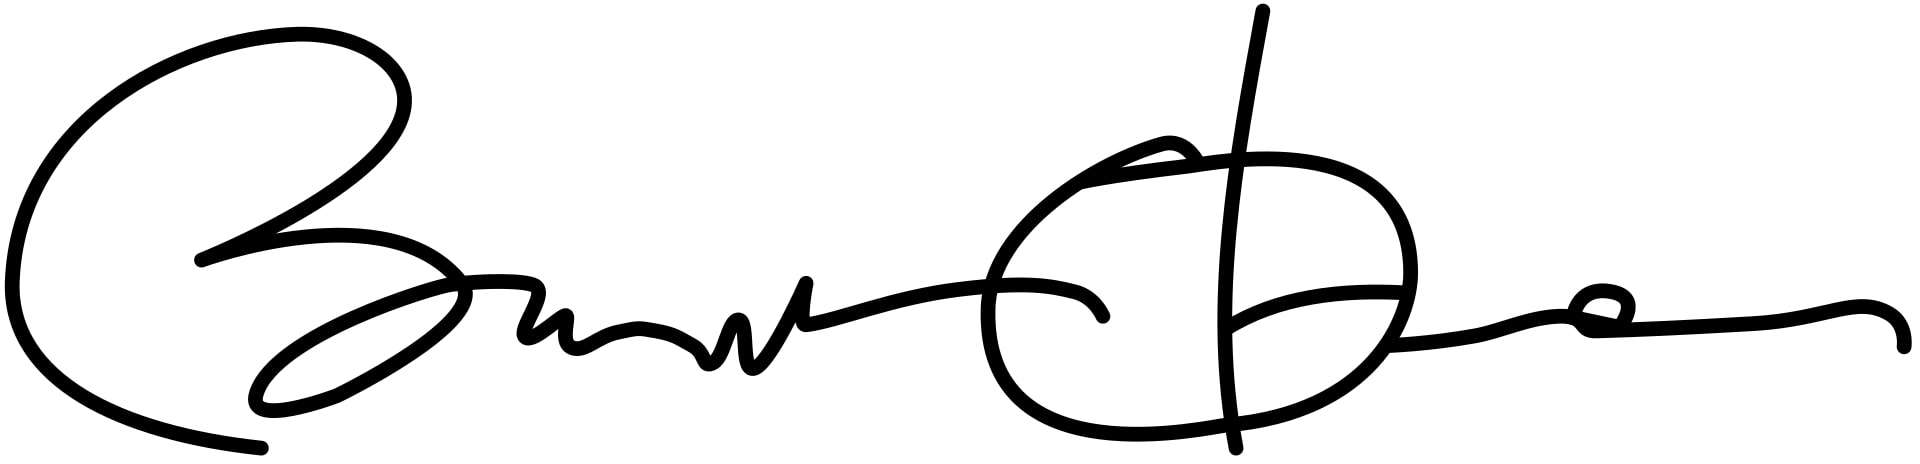 Barack Obama Signature